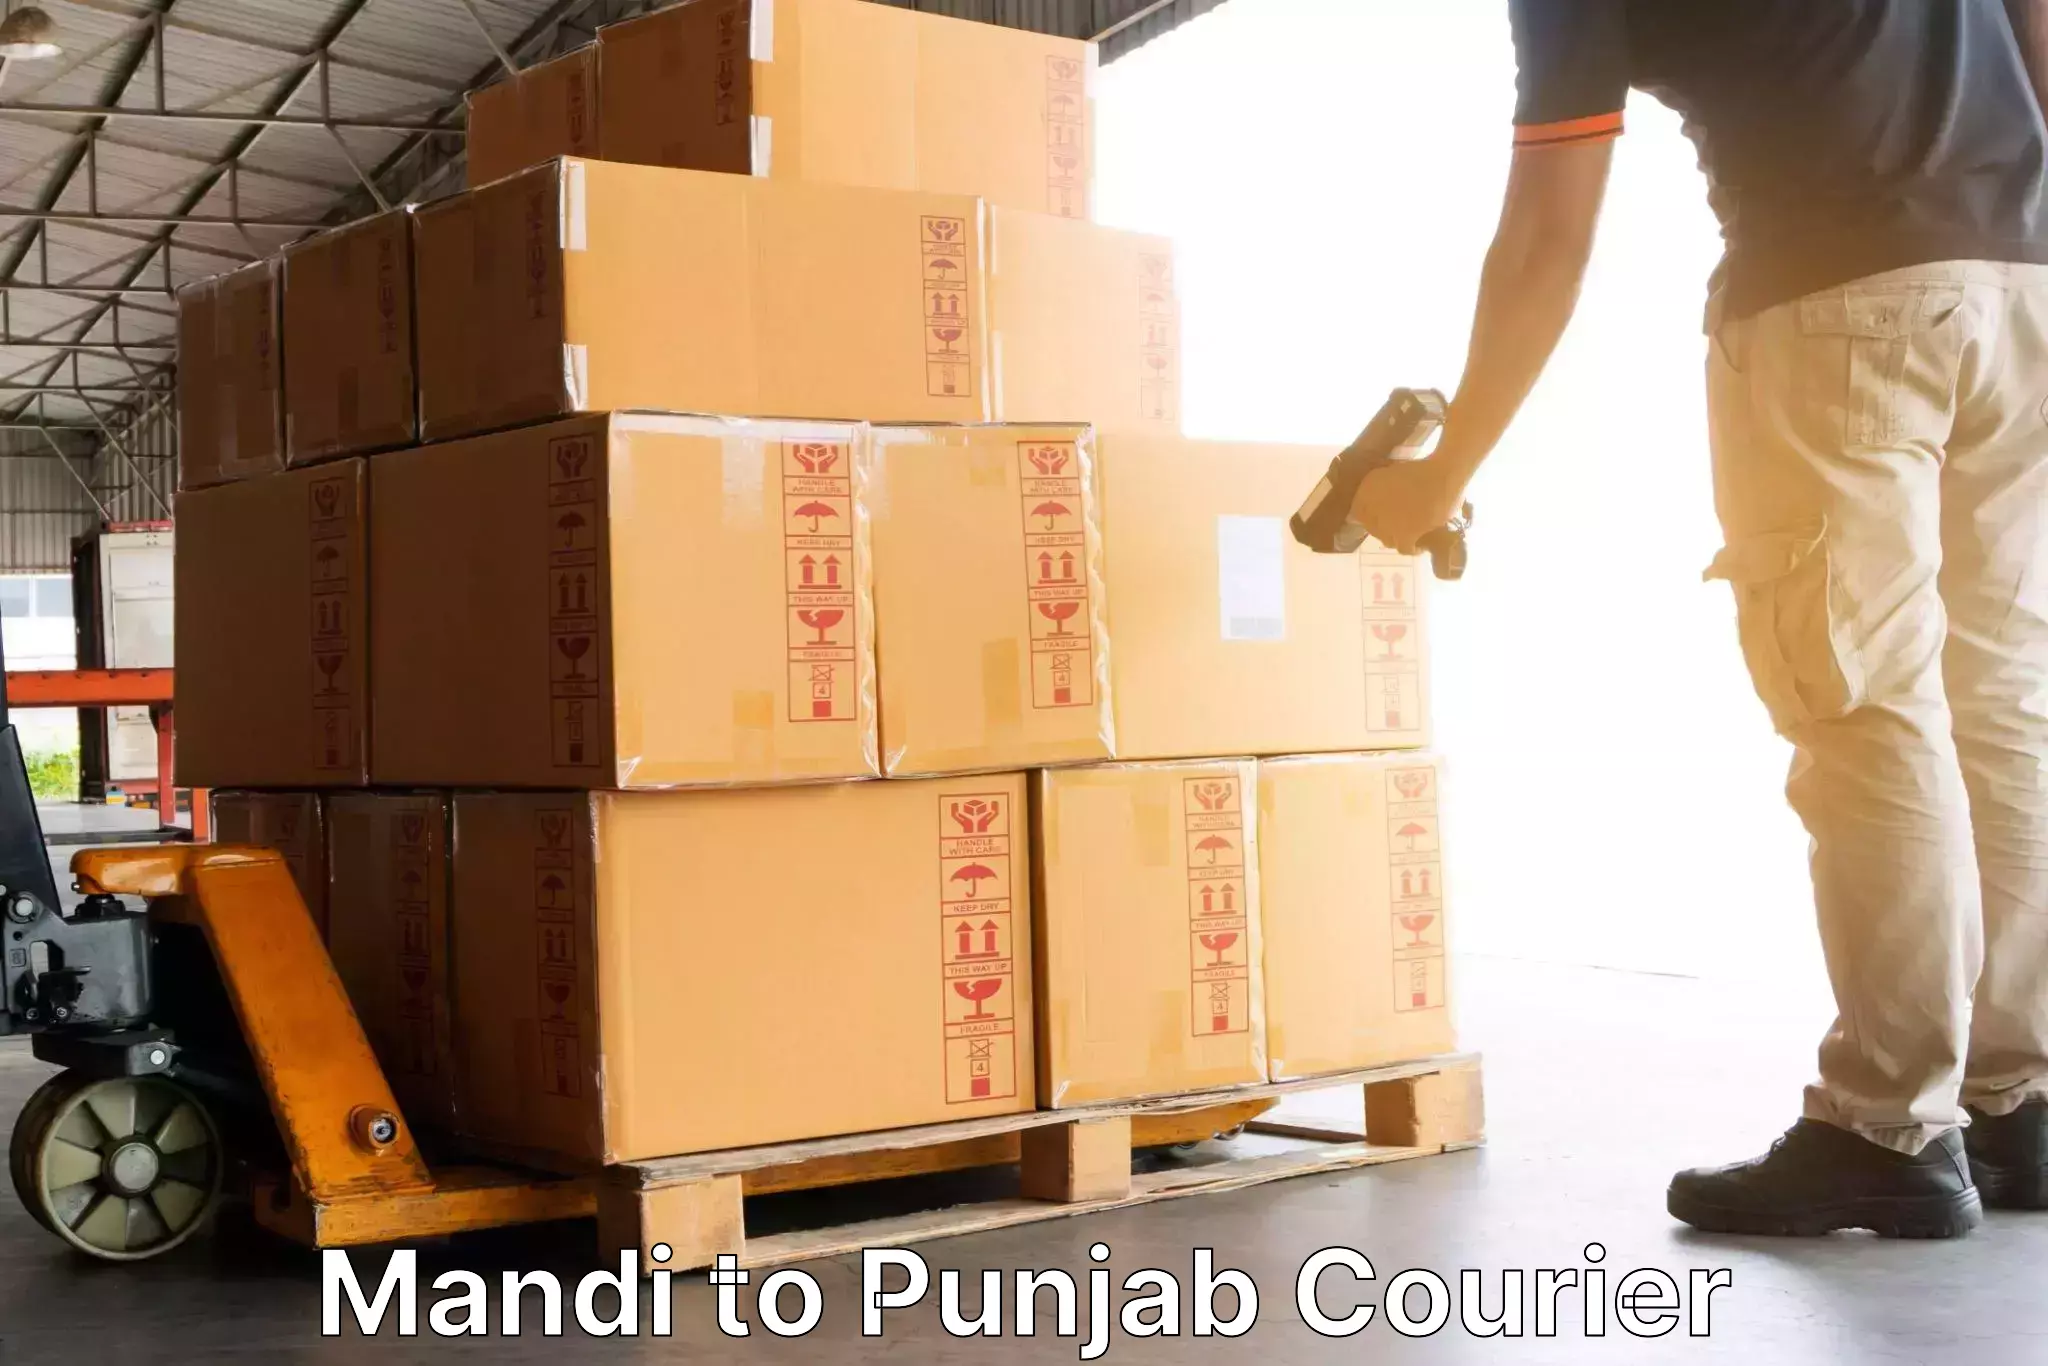 Full-service courier options Mandi to Ludhiana